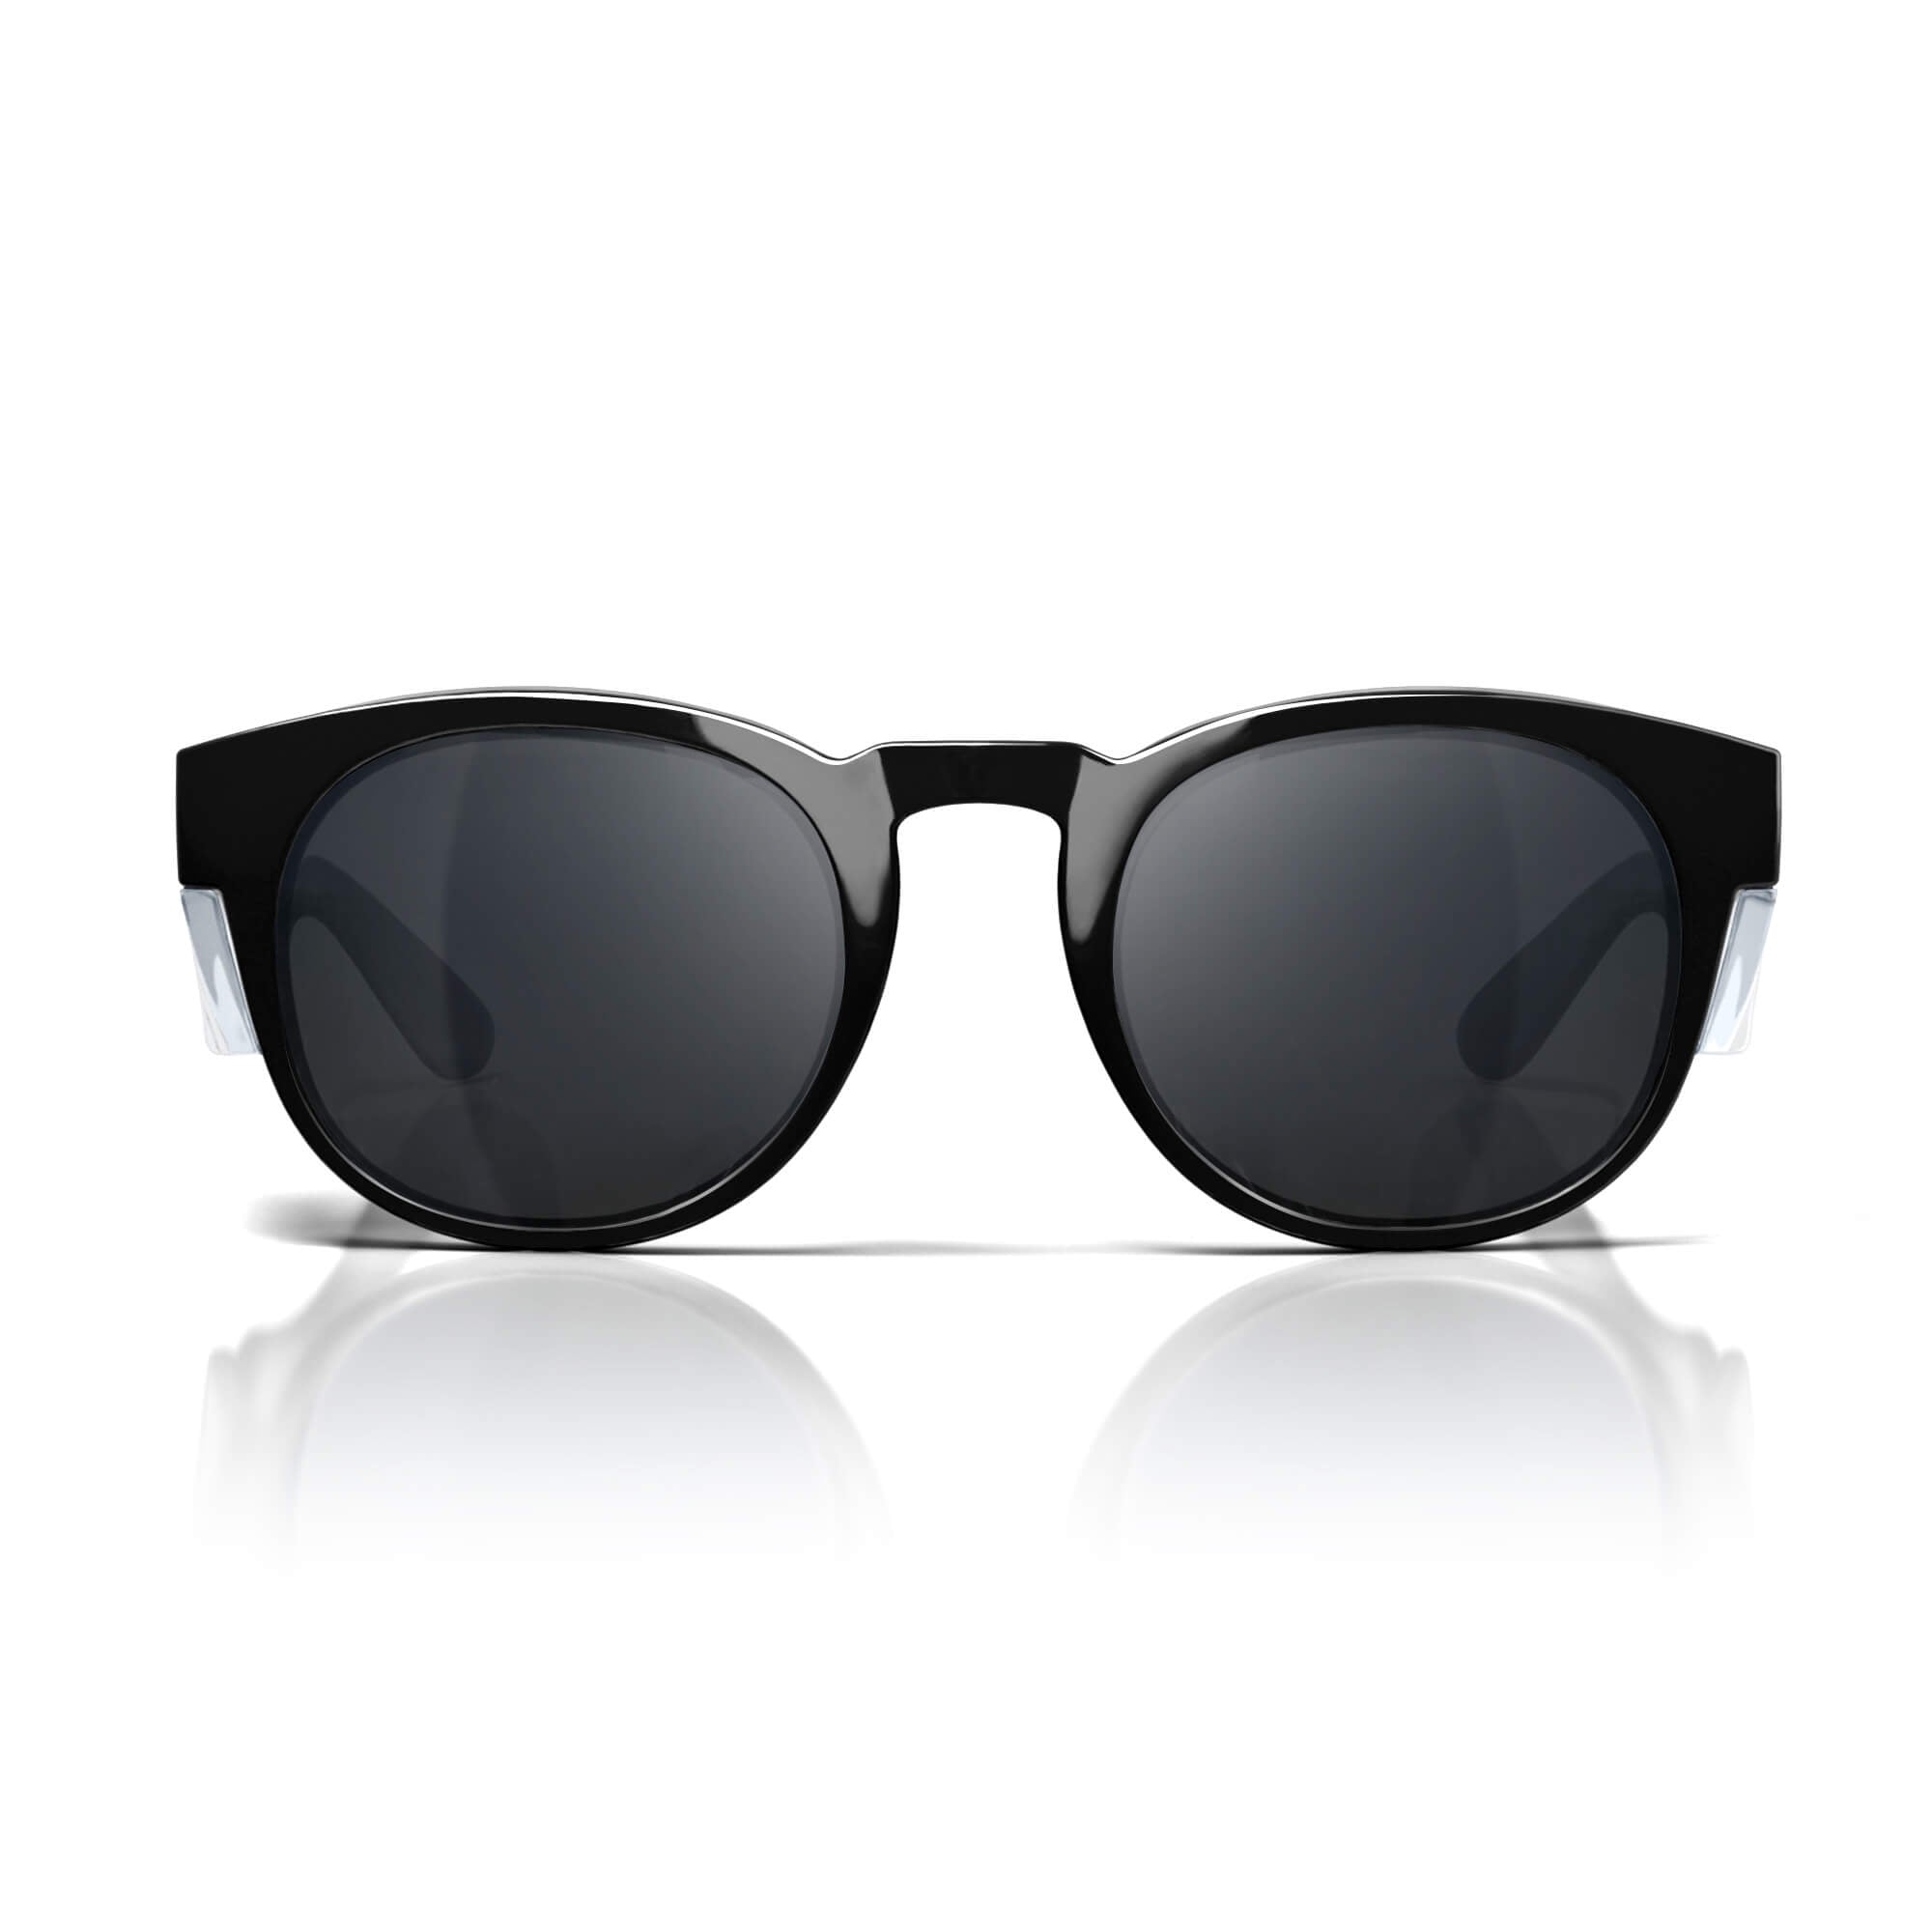 SafeStyle Cruisers Black Frame/Polarised UV400 glasses